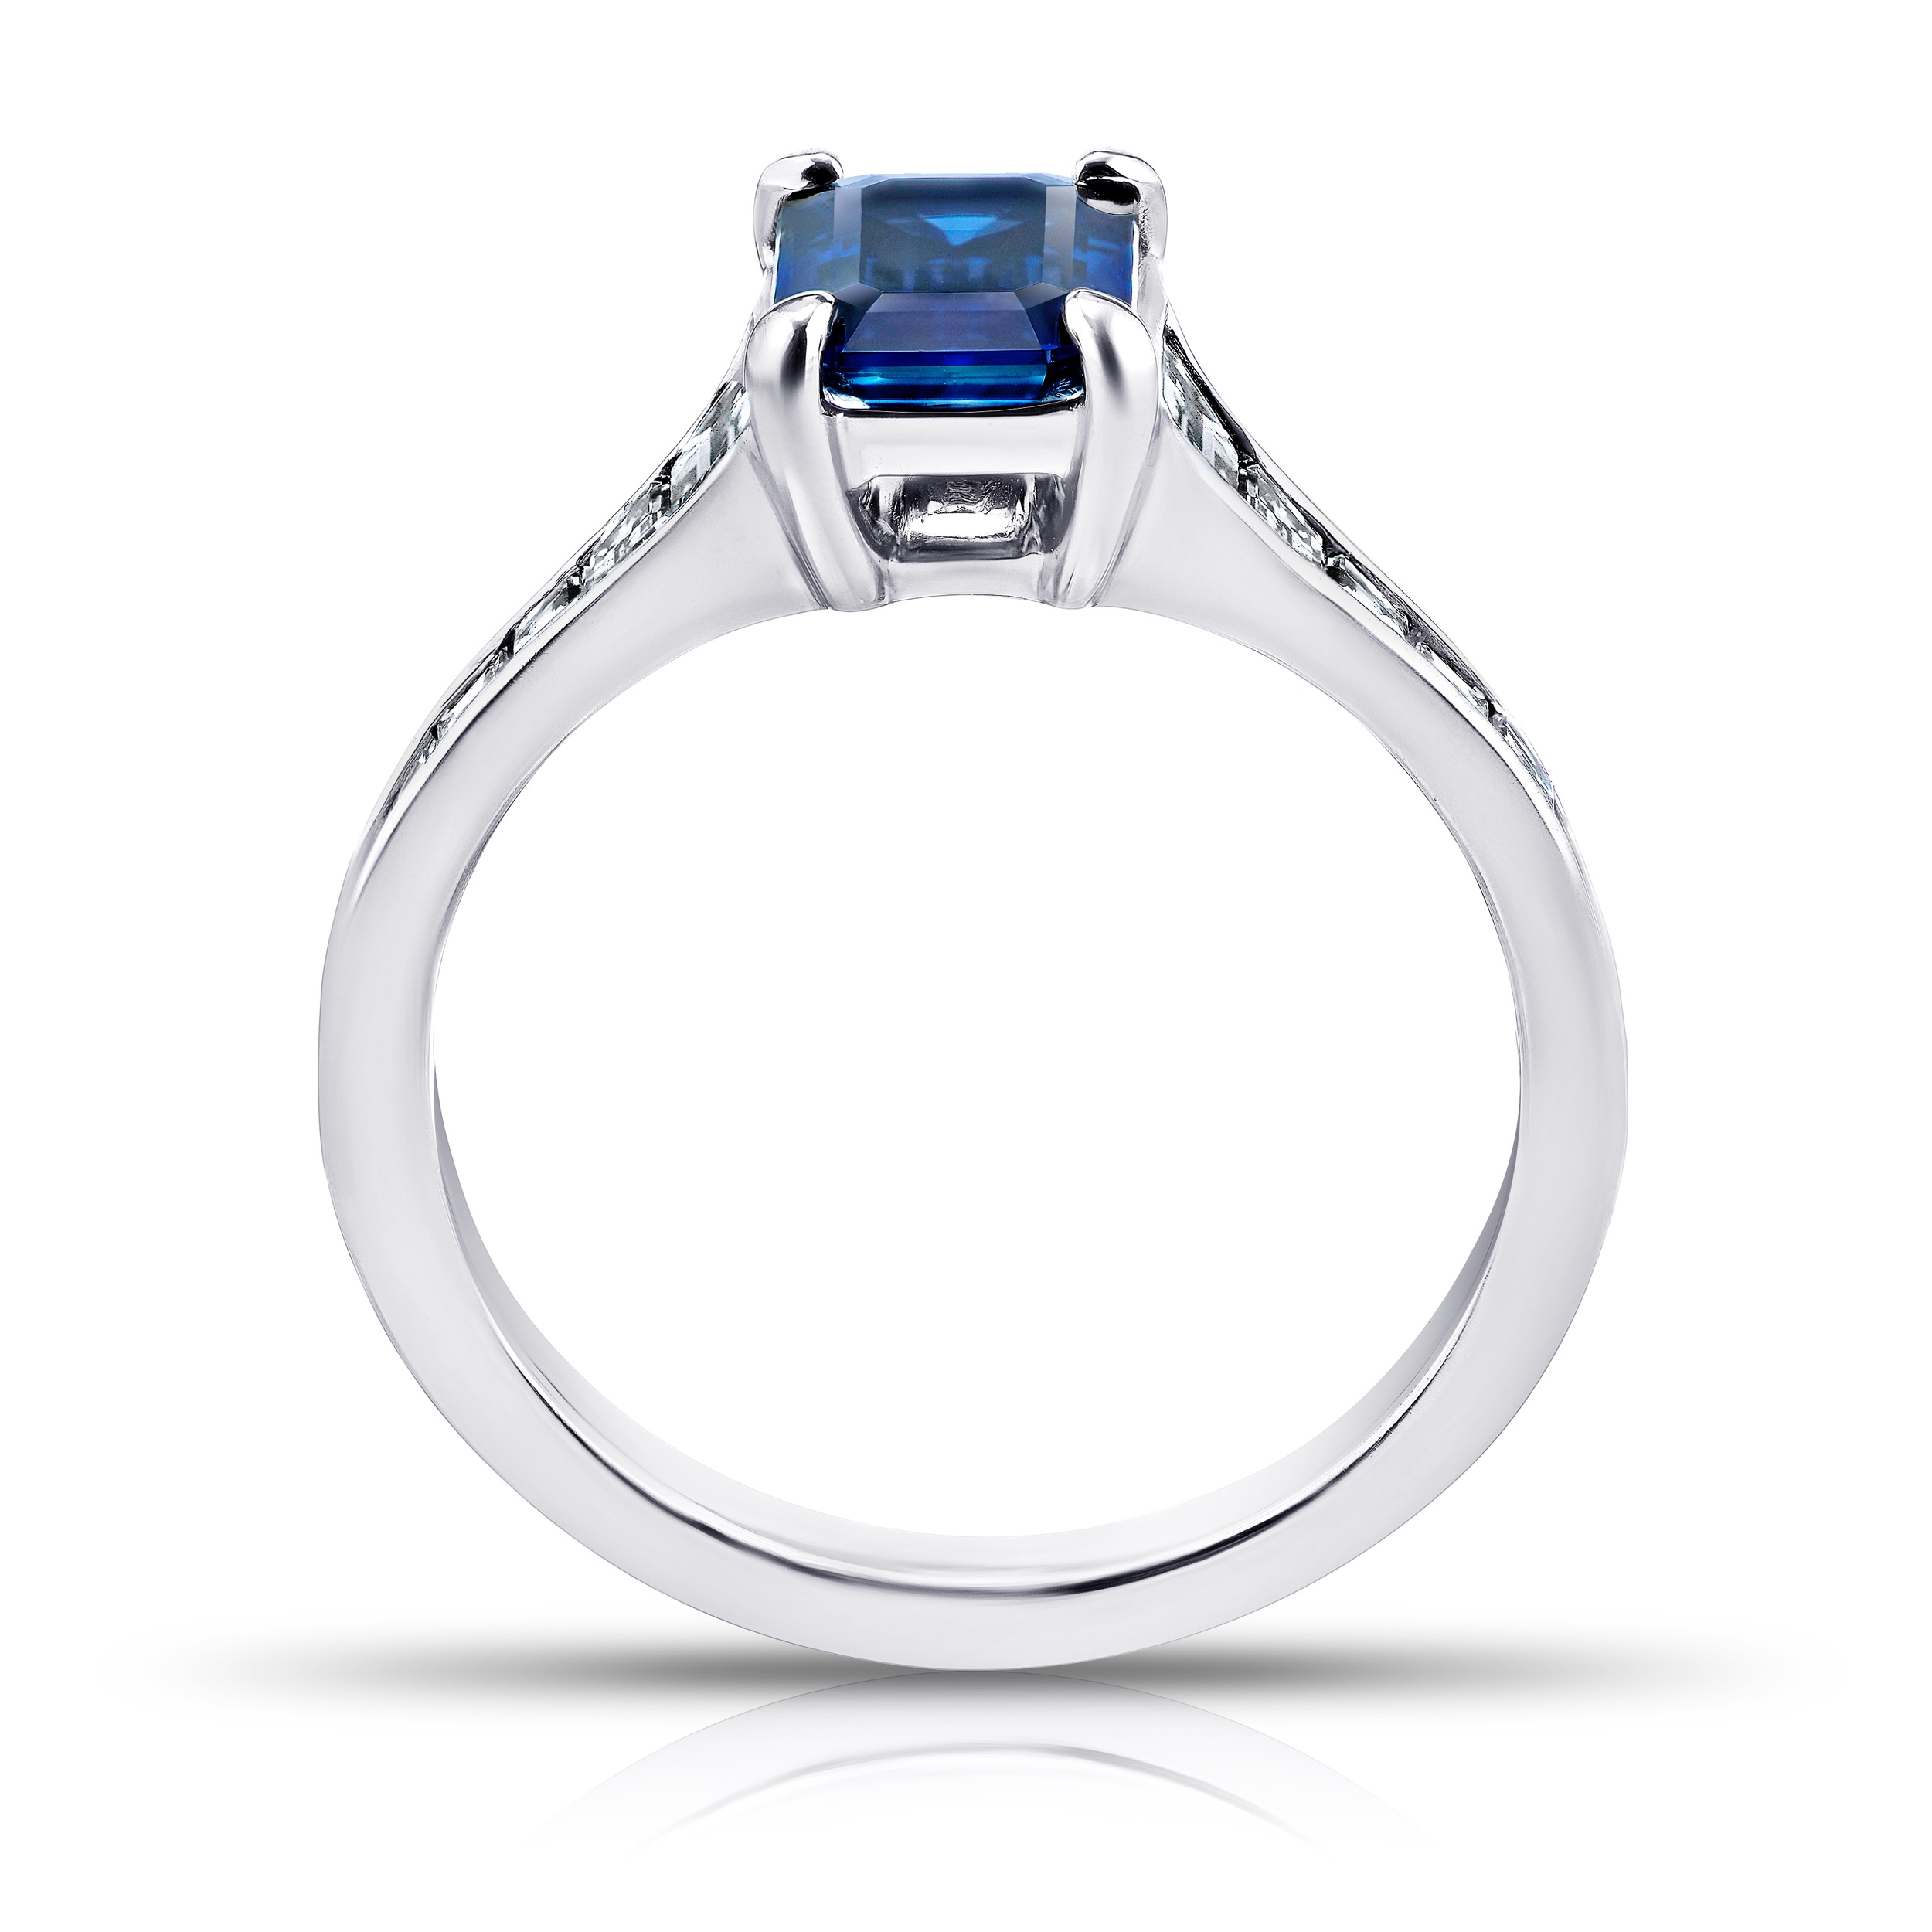 1.41 Carat Emerald Cut Blue Sapphire Ring - Beveli Official eShop